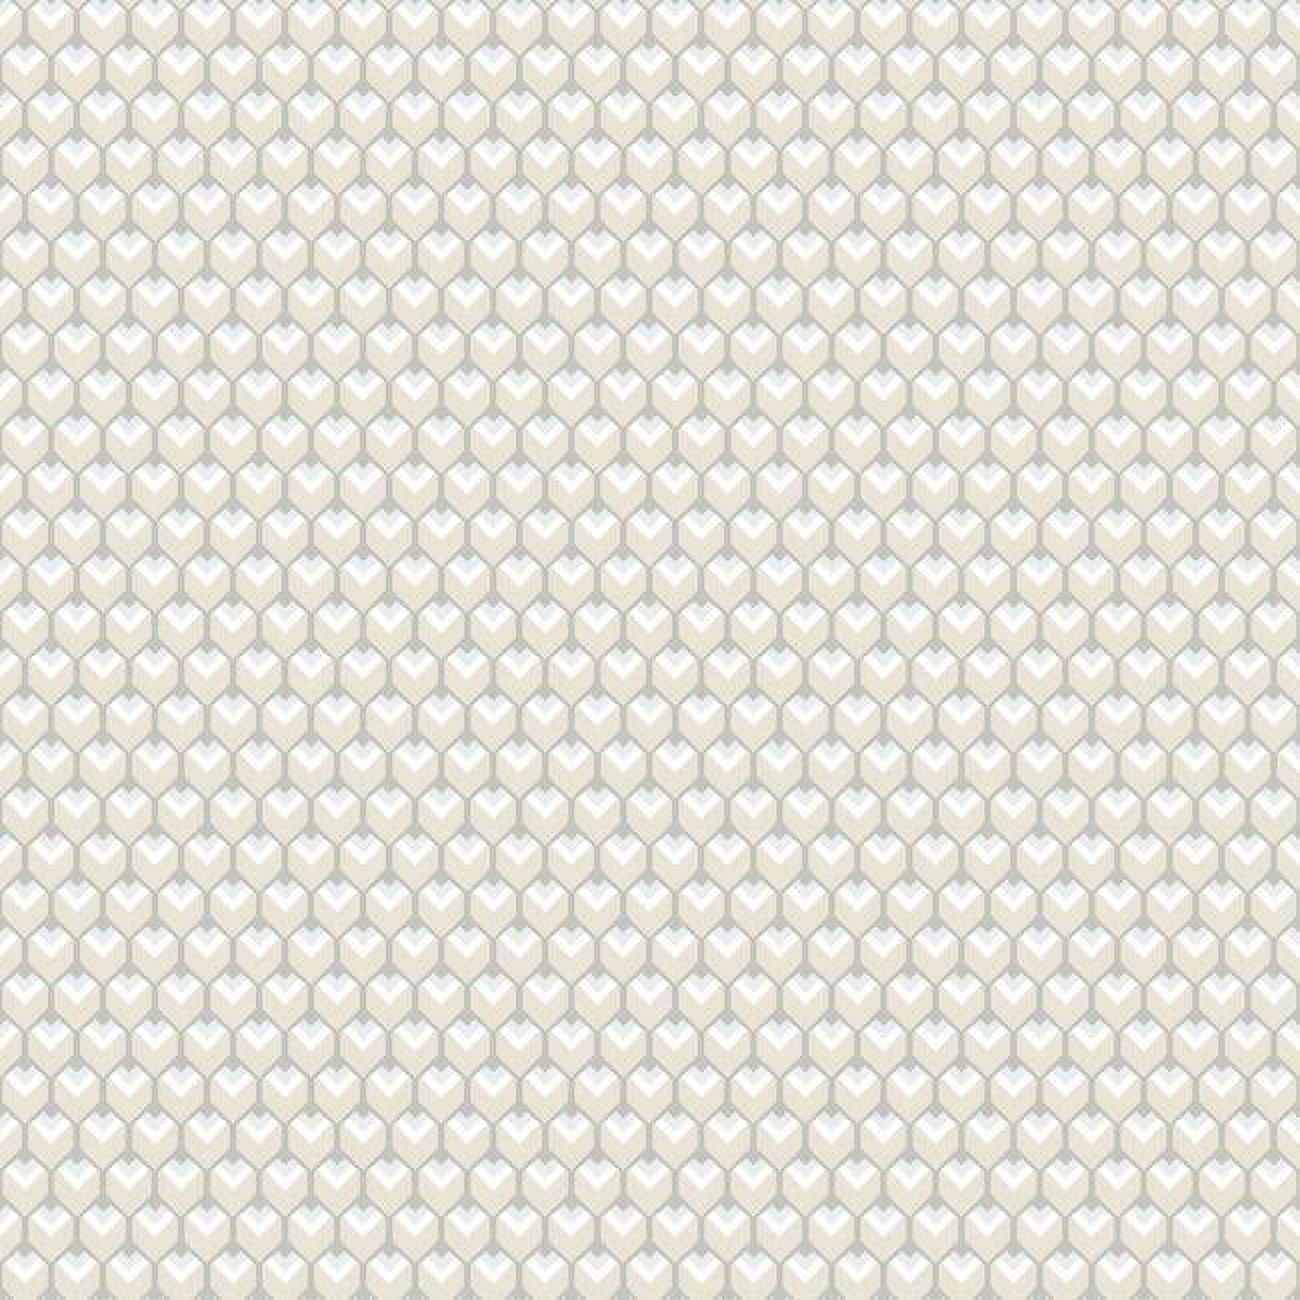 3D Petite Hexagons Peel and Stick Wallpaper - image 1 of 22